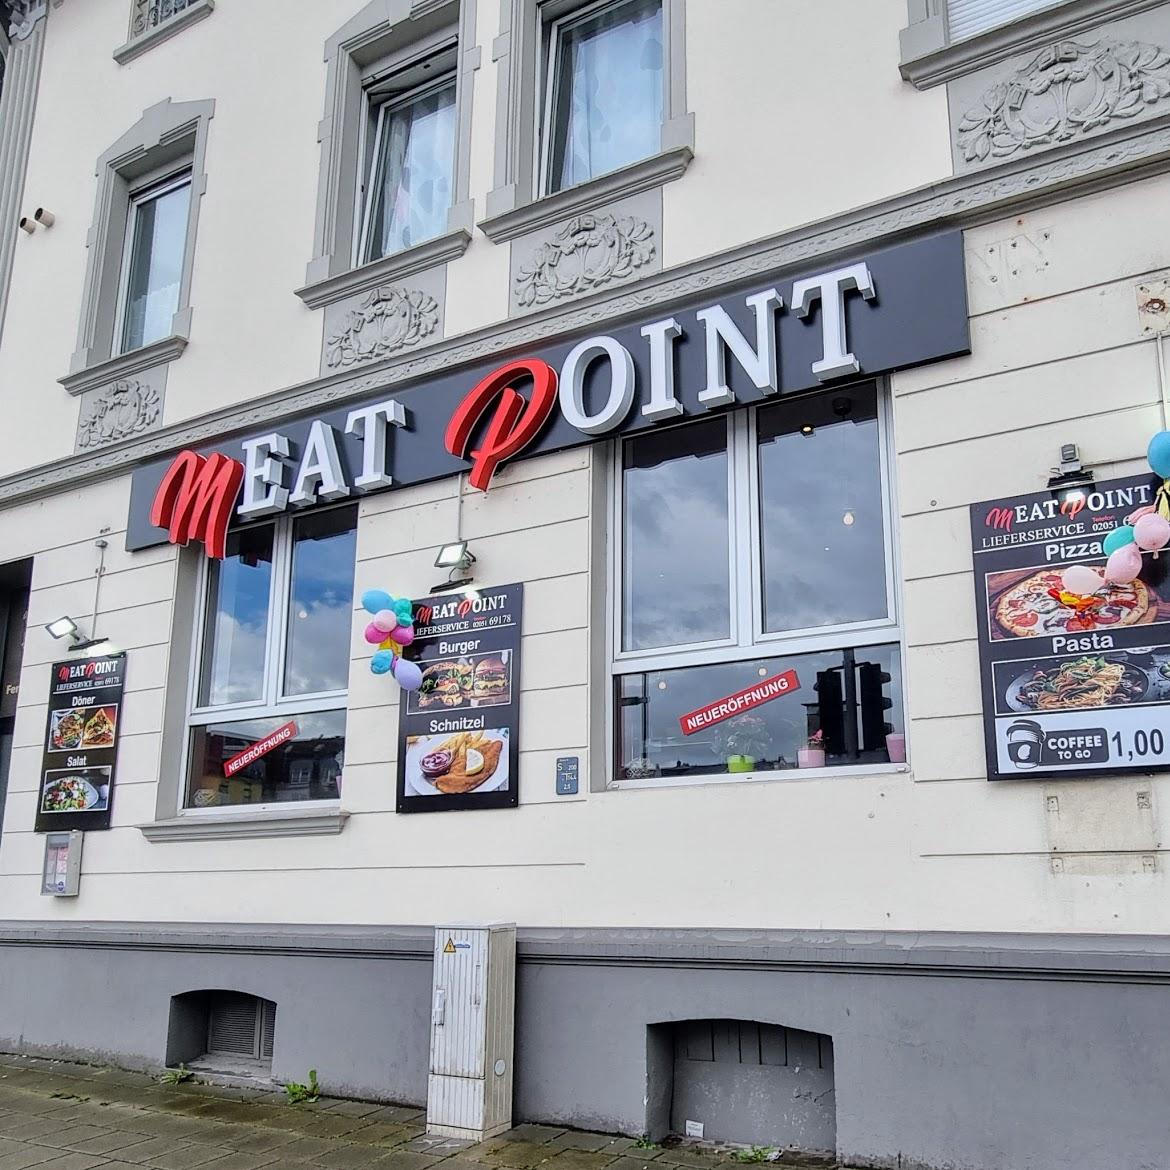 Restaurant "Meat Point" in Velbert